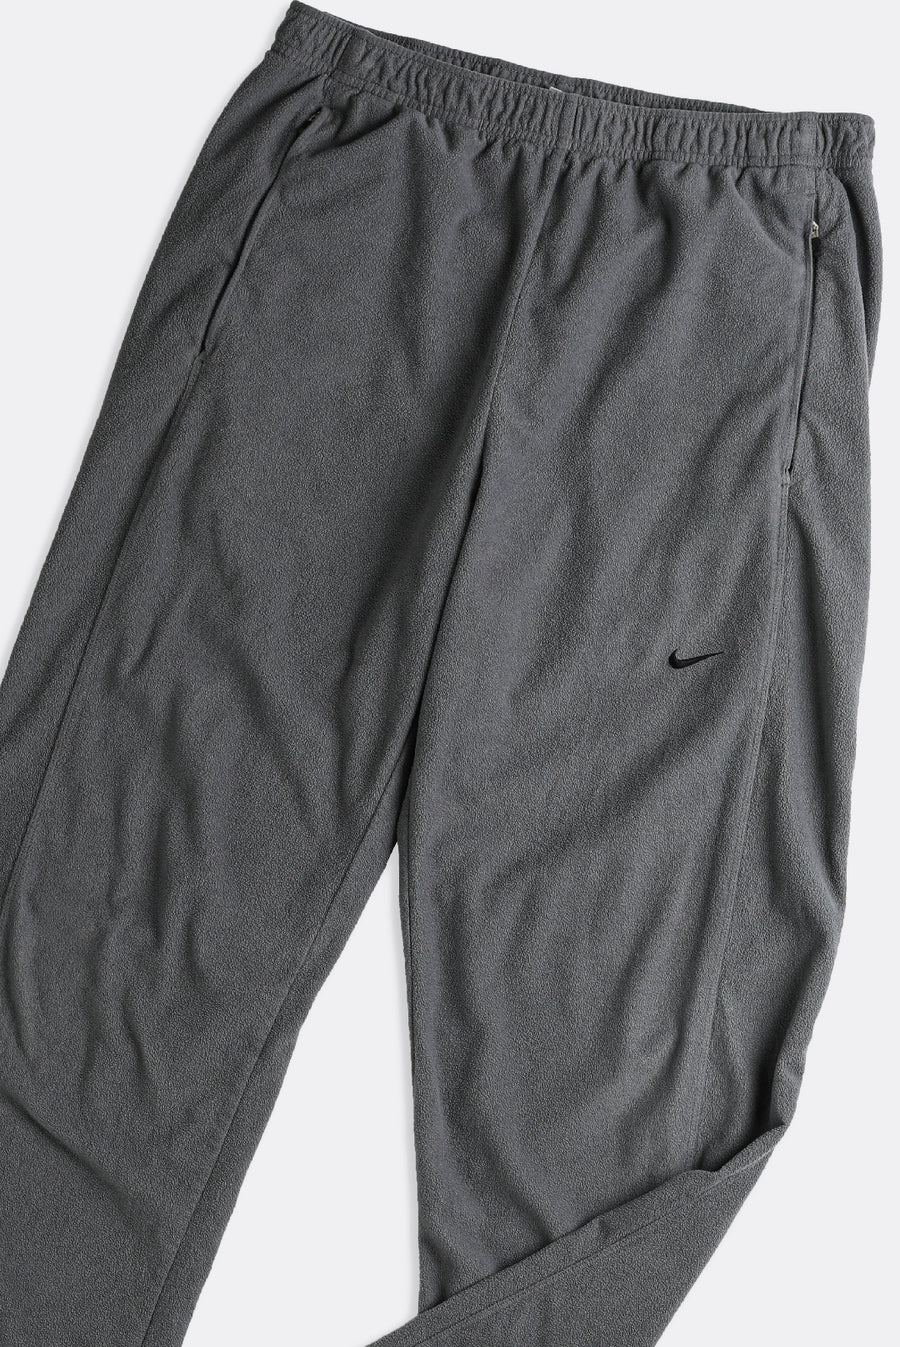 Vintage Nike Fleece Pants - M